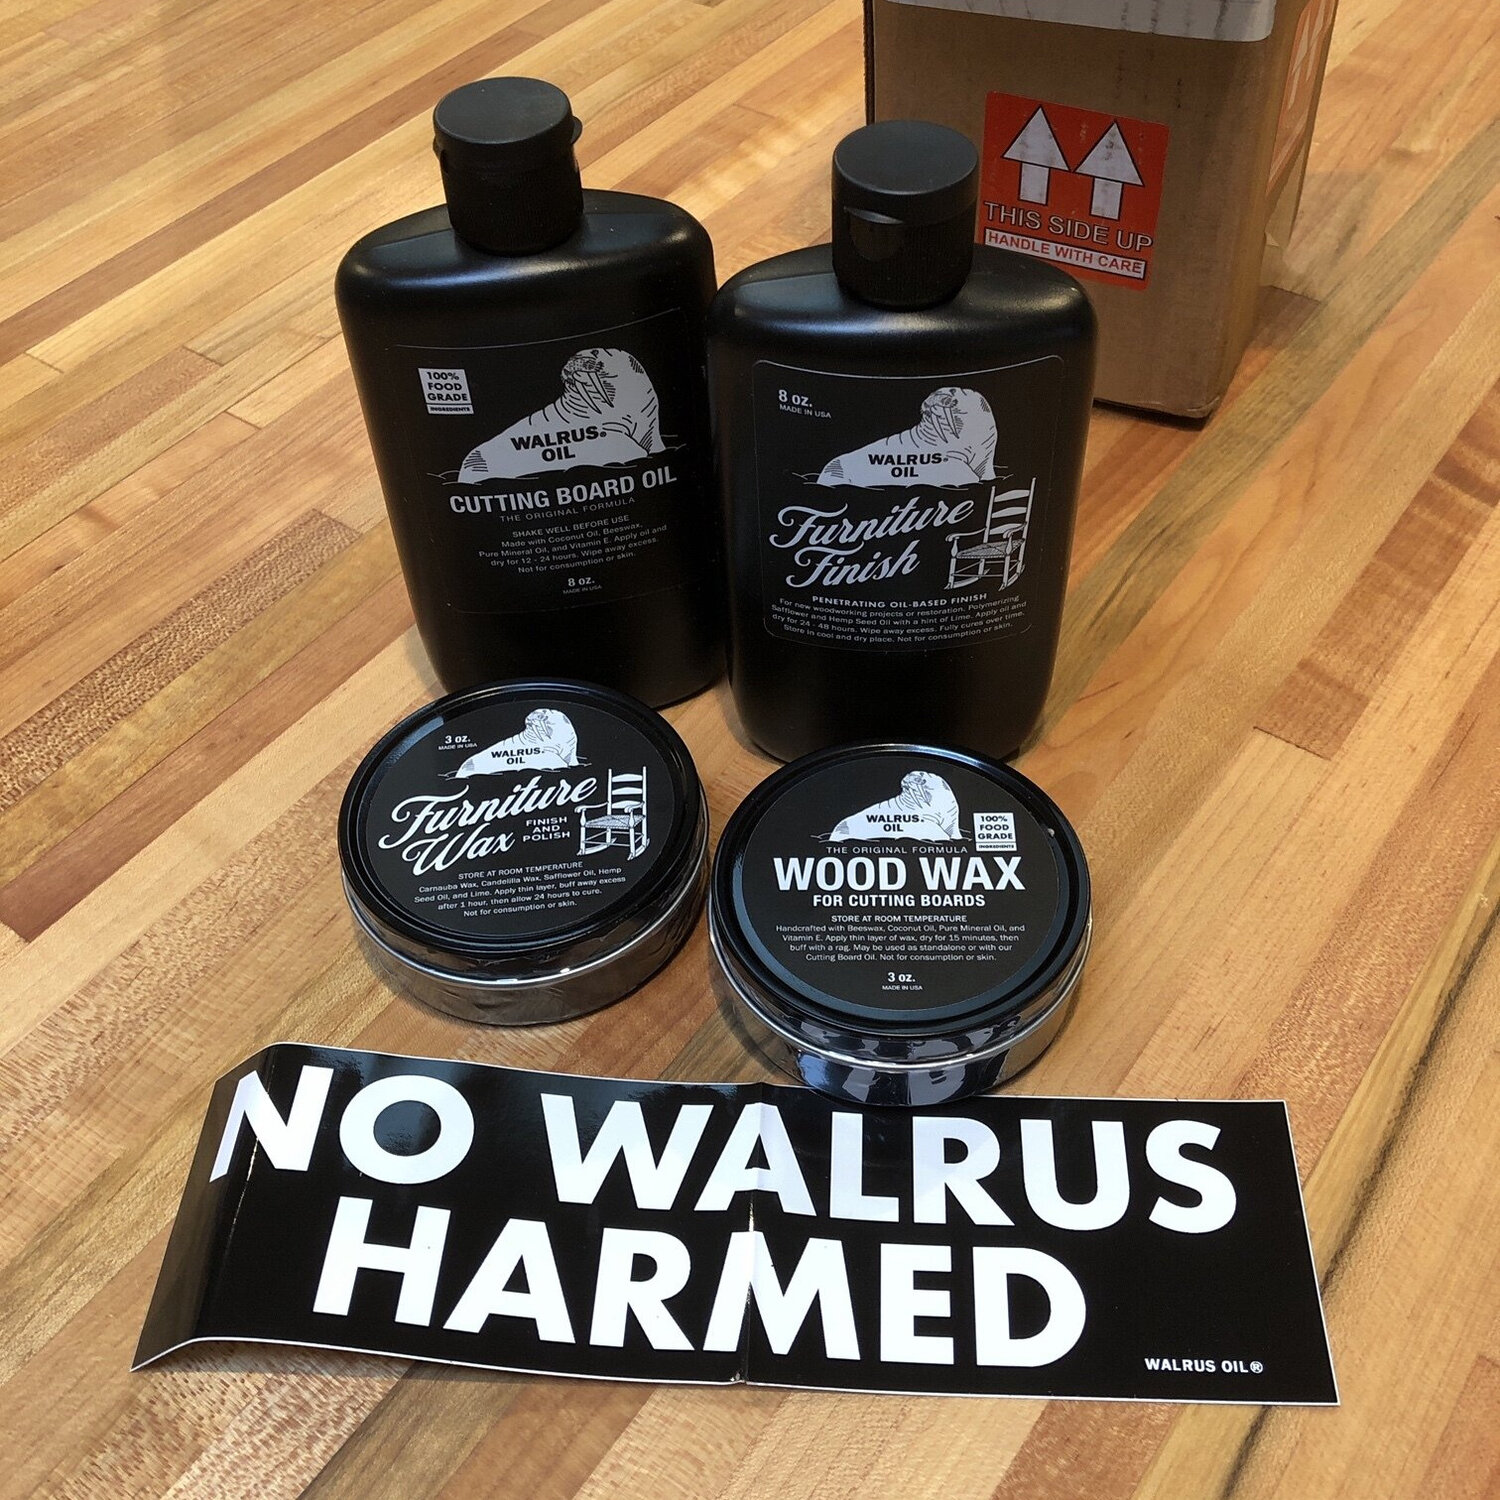 Walrus Oil Cutting Board Oil 8 Ounce